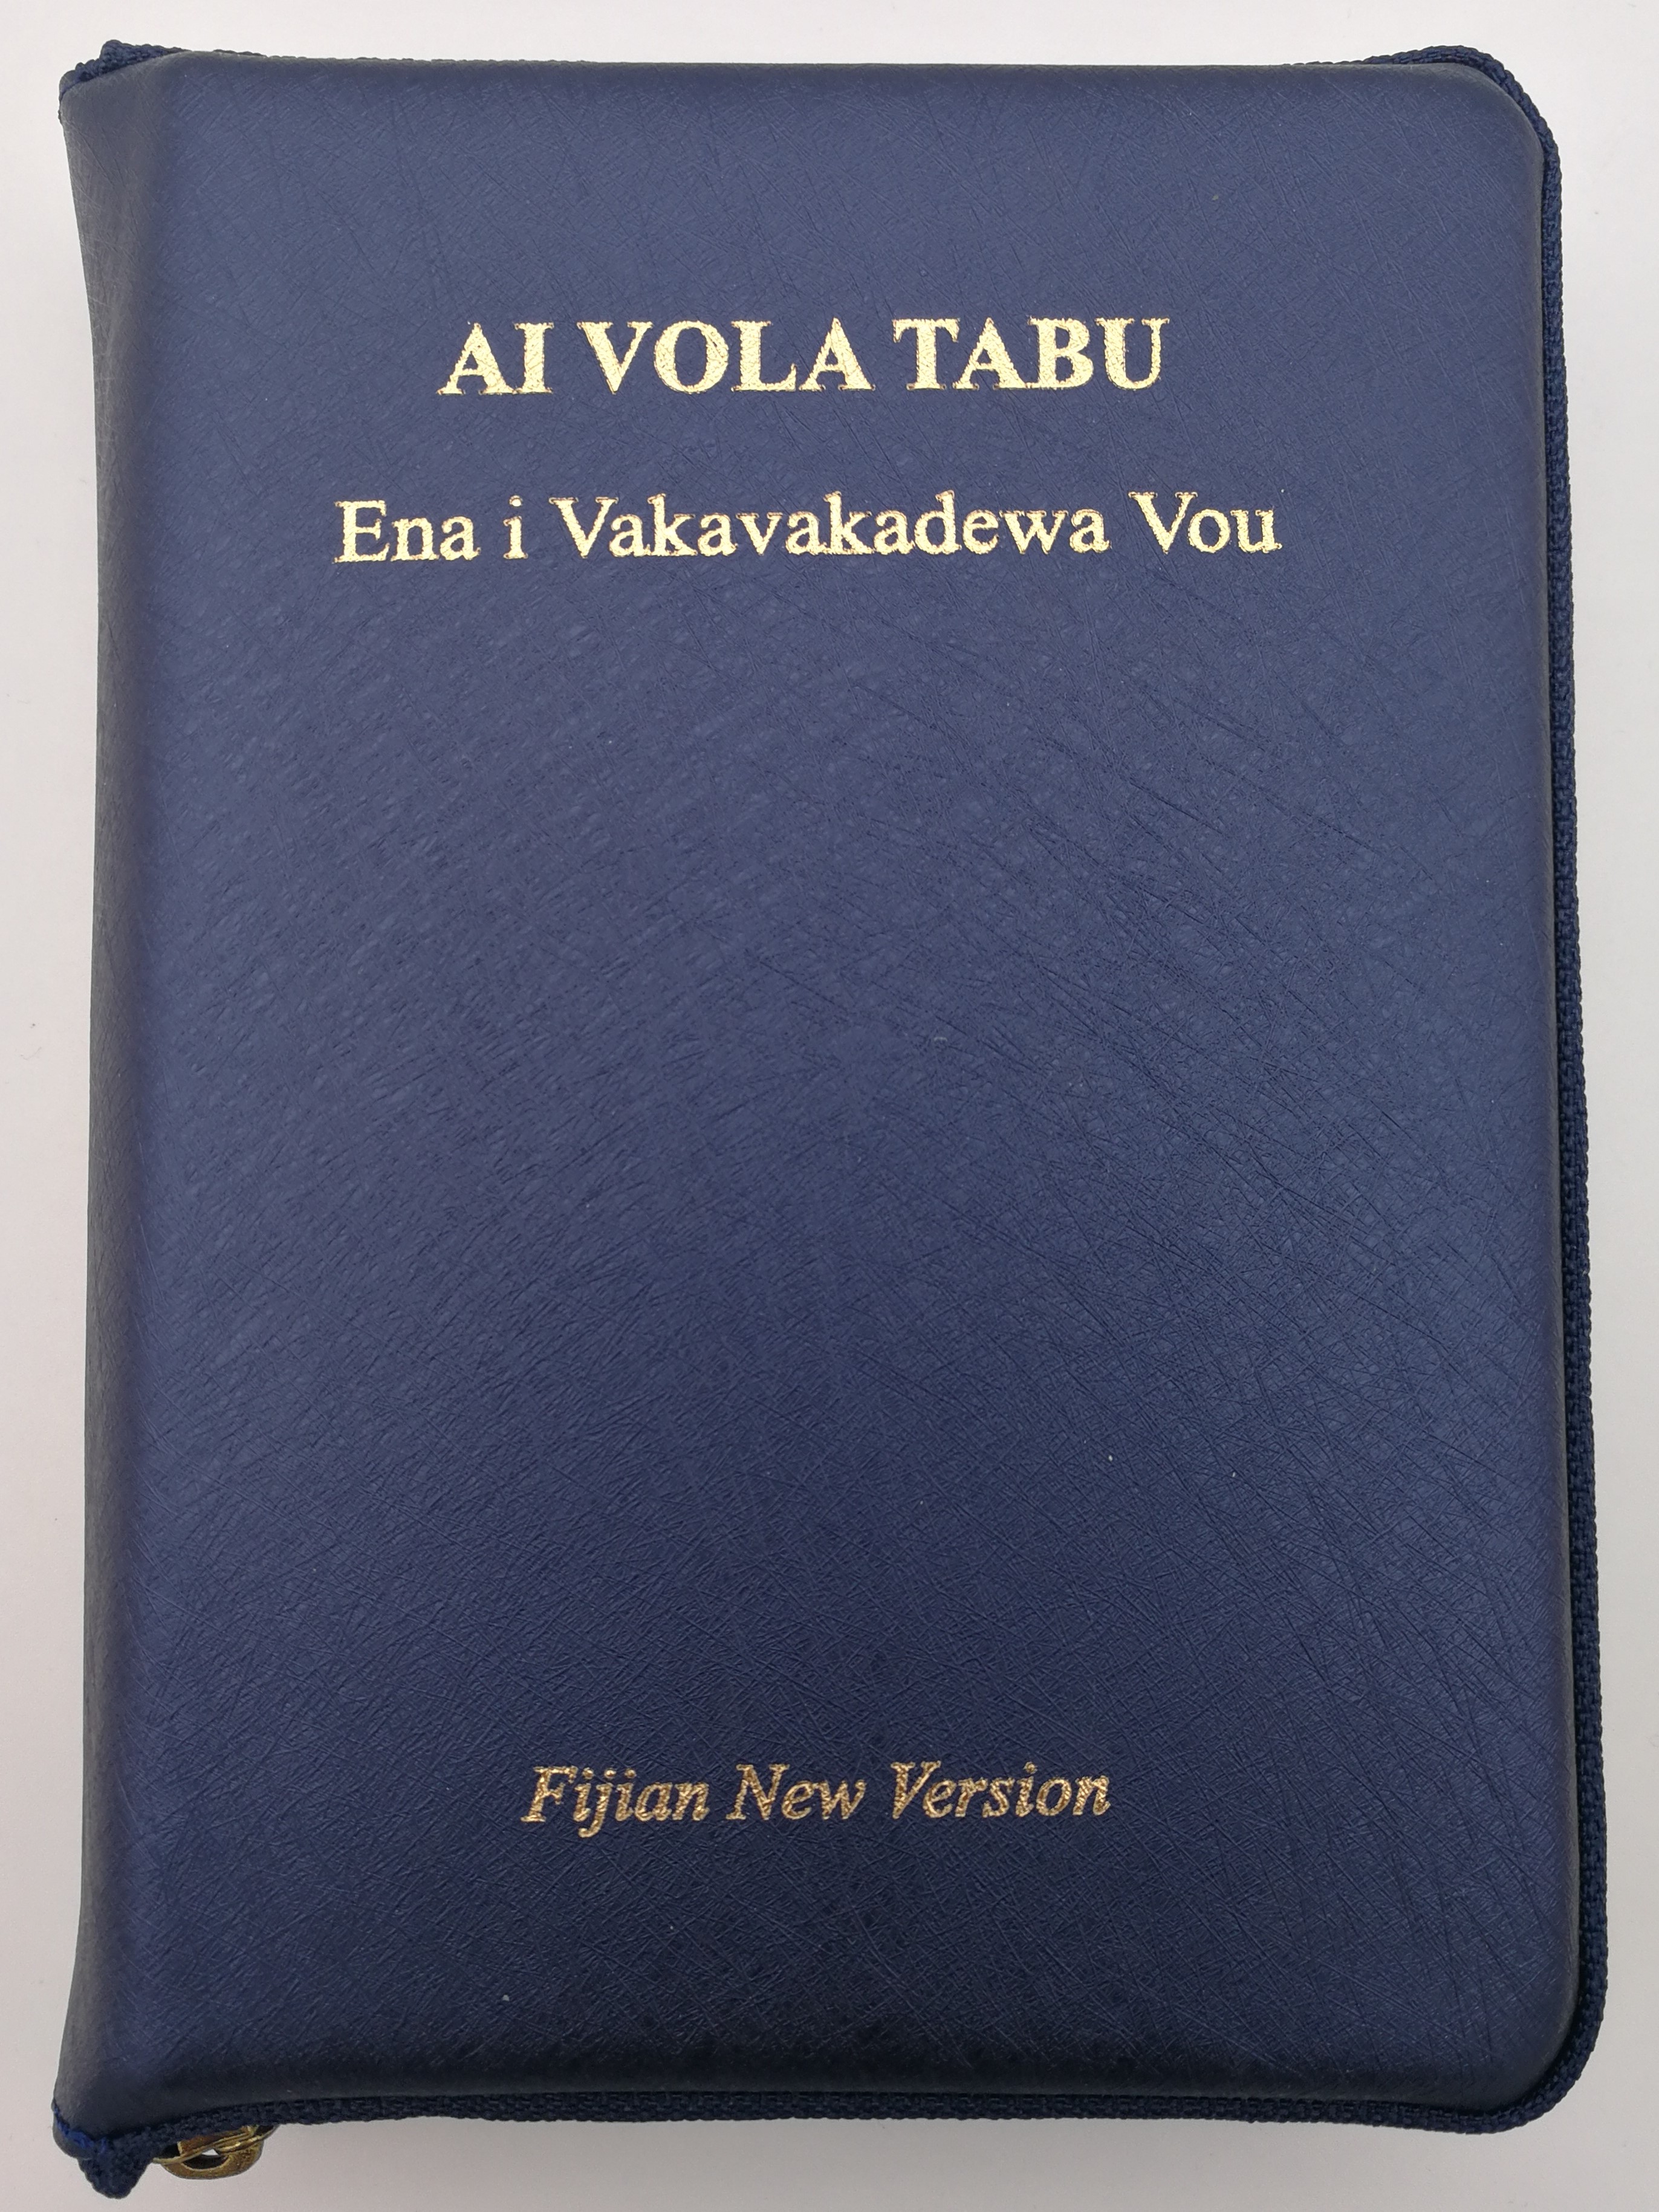 fijian-new-version-holy-bible-ai-vola-tabu-1.jpg